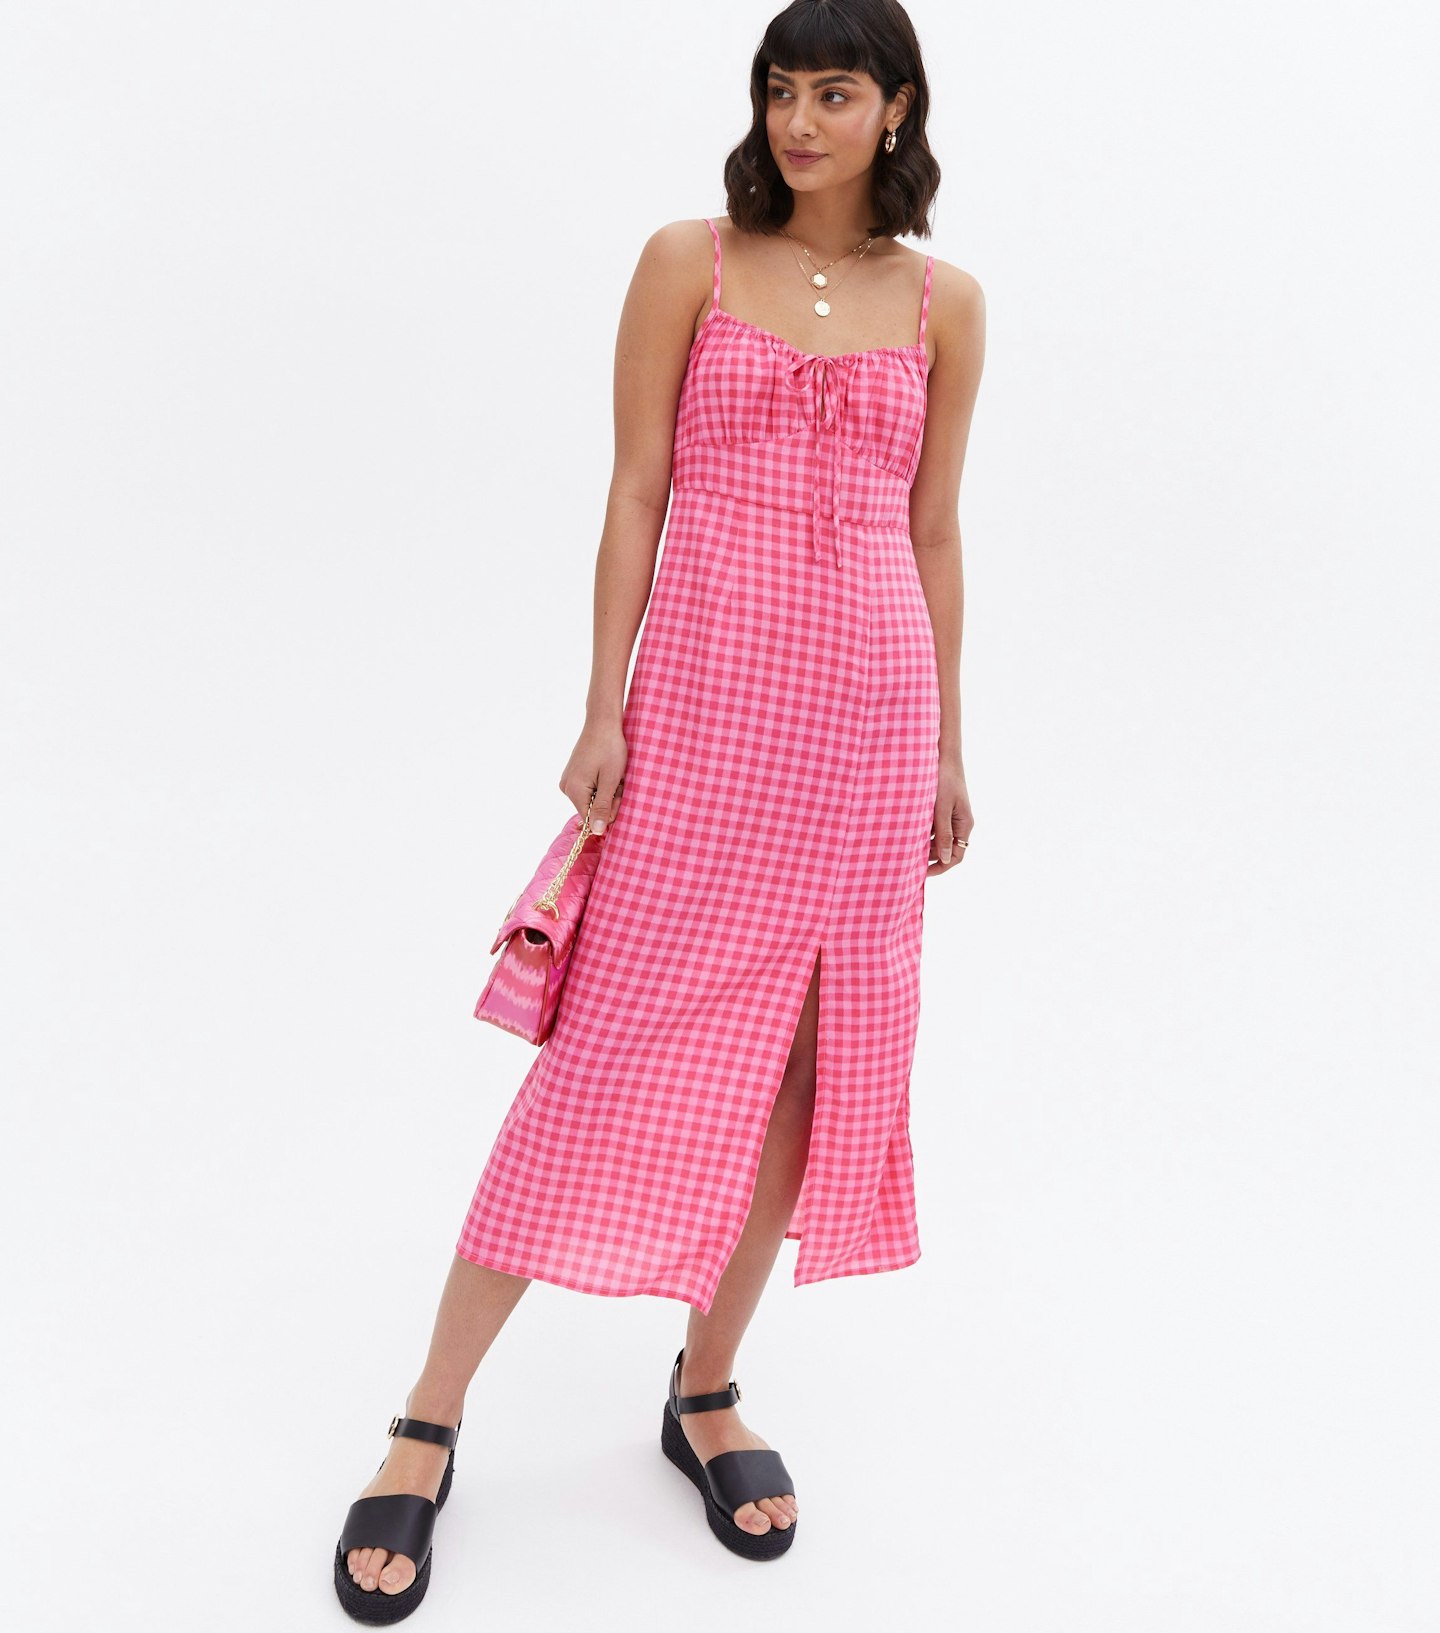 lunchtime shop Monday - New Look, Pink Gingham Split Hem Bustier Midi Dress, £23.99